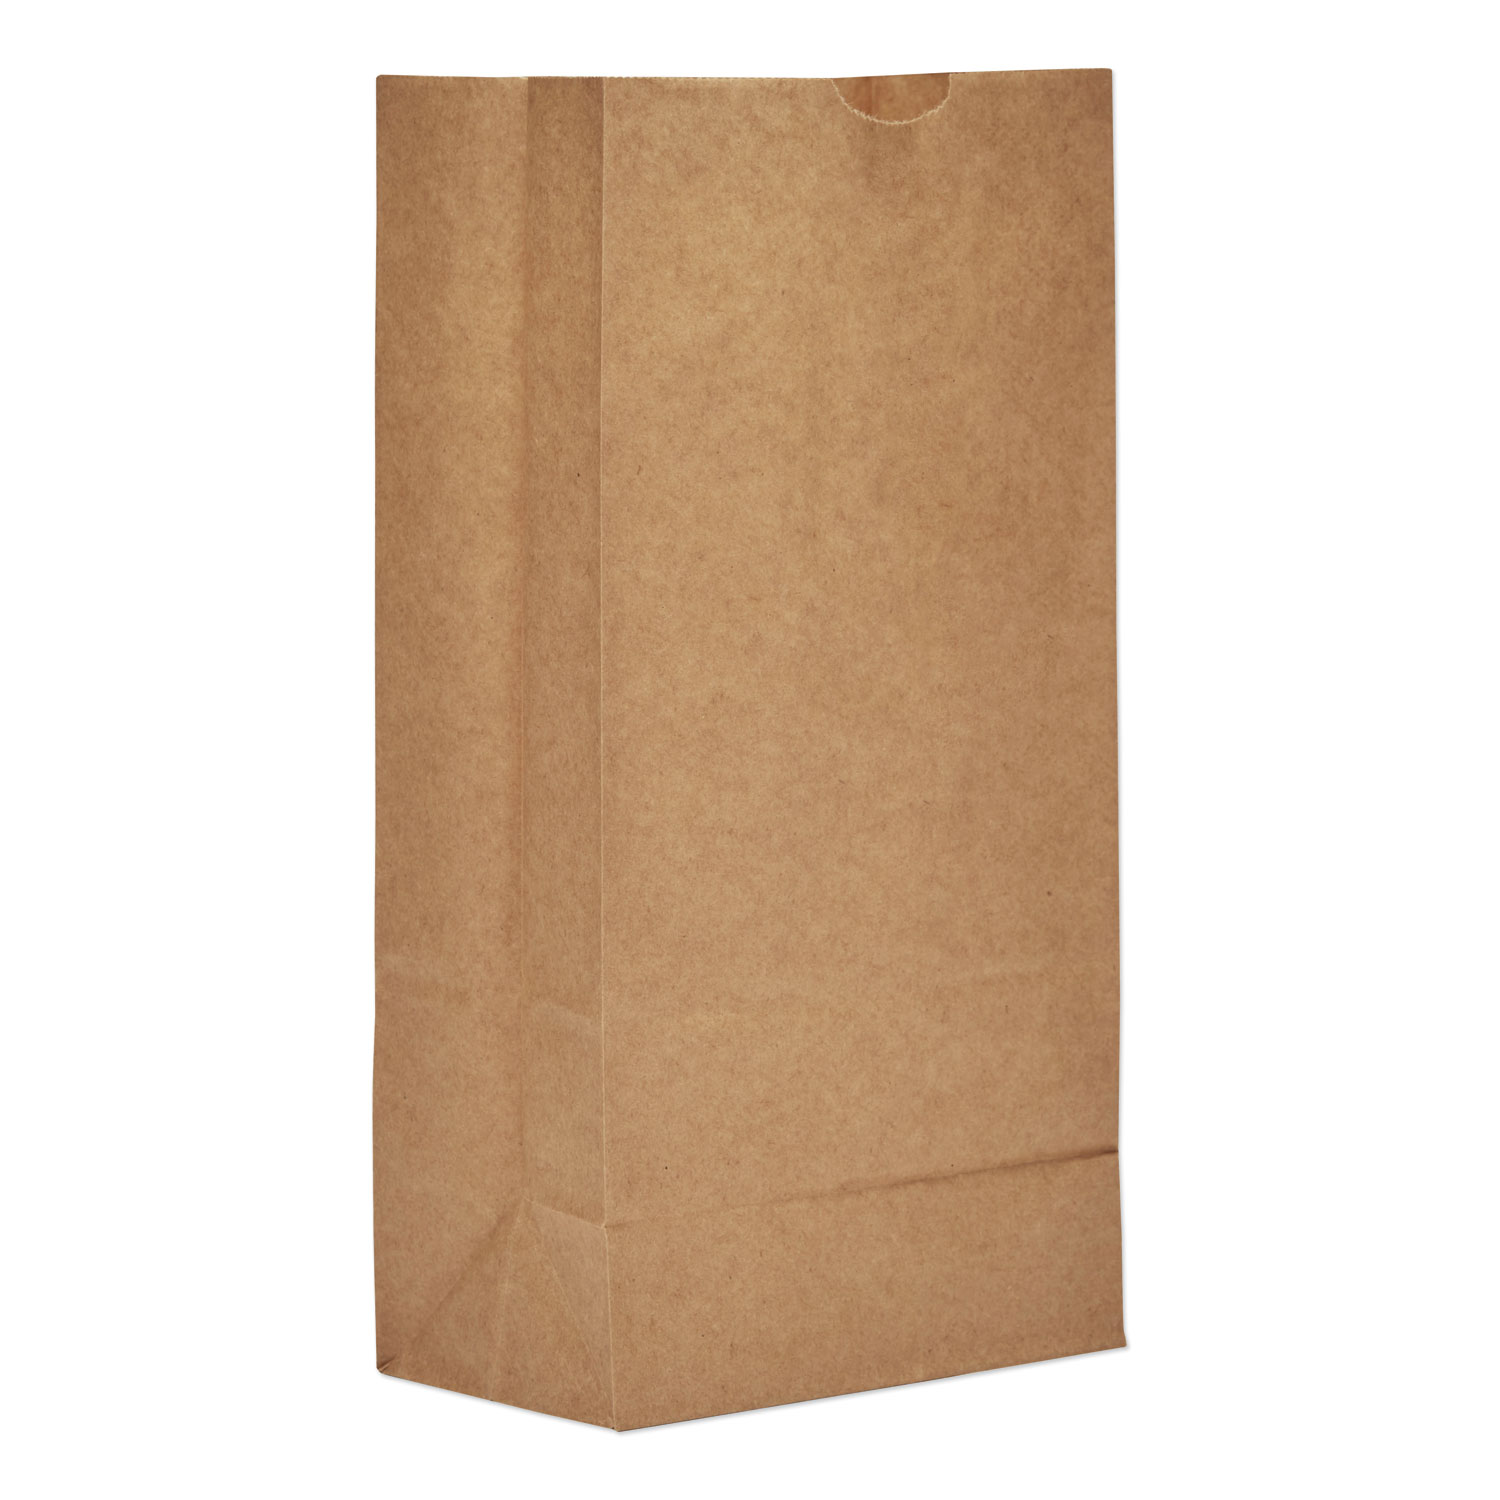  General 18408 Grocery Paper Bags, 35 lbs Capacity, #8, 6.13w x 4.17d x 12.44h, Kraft, 500 Bags (BAGGK8500) 